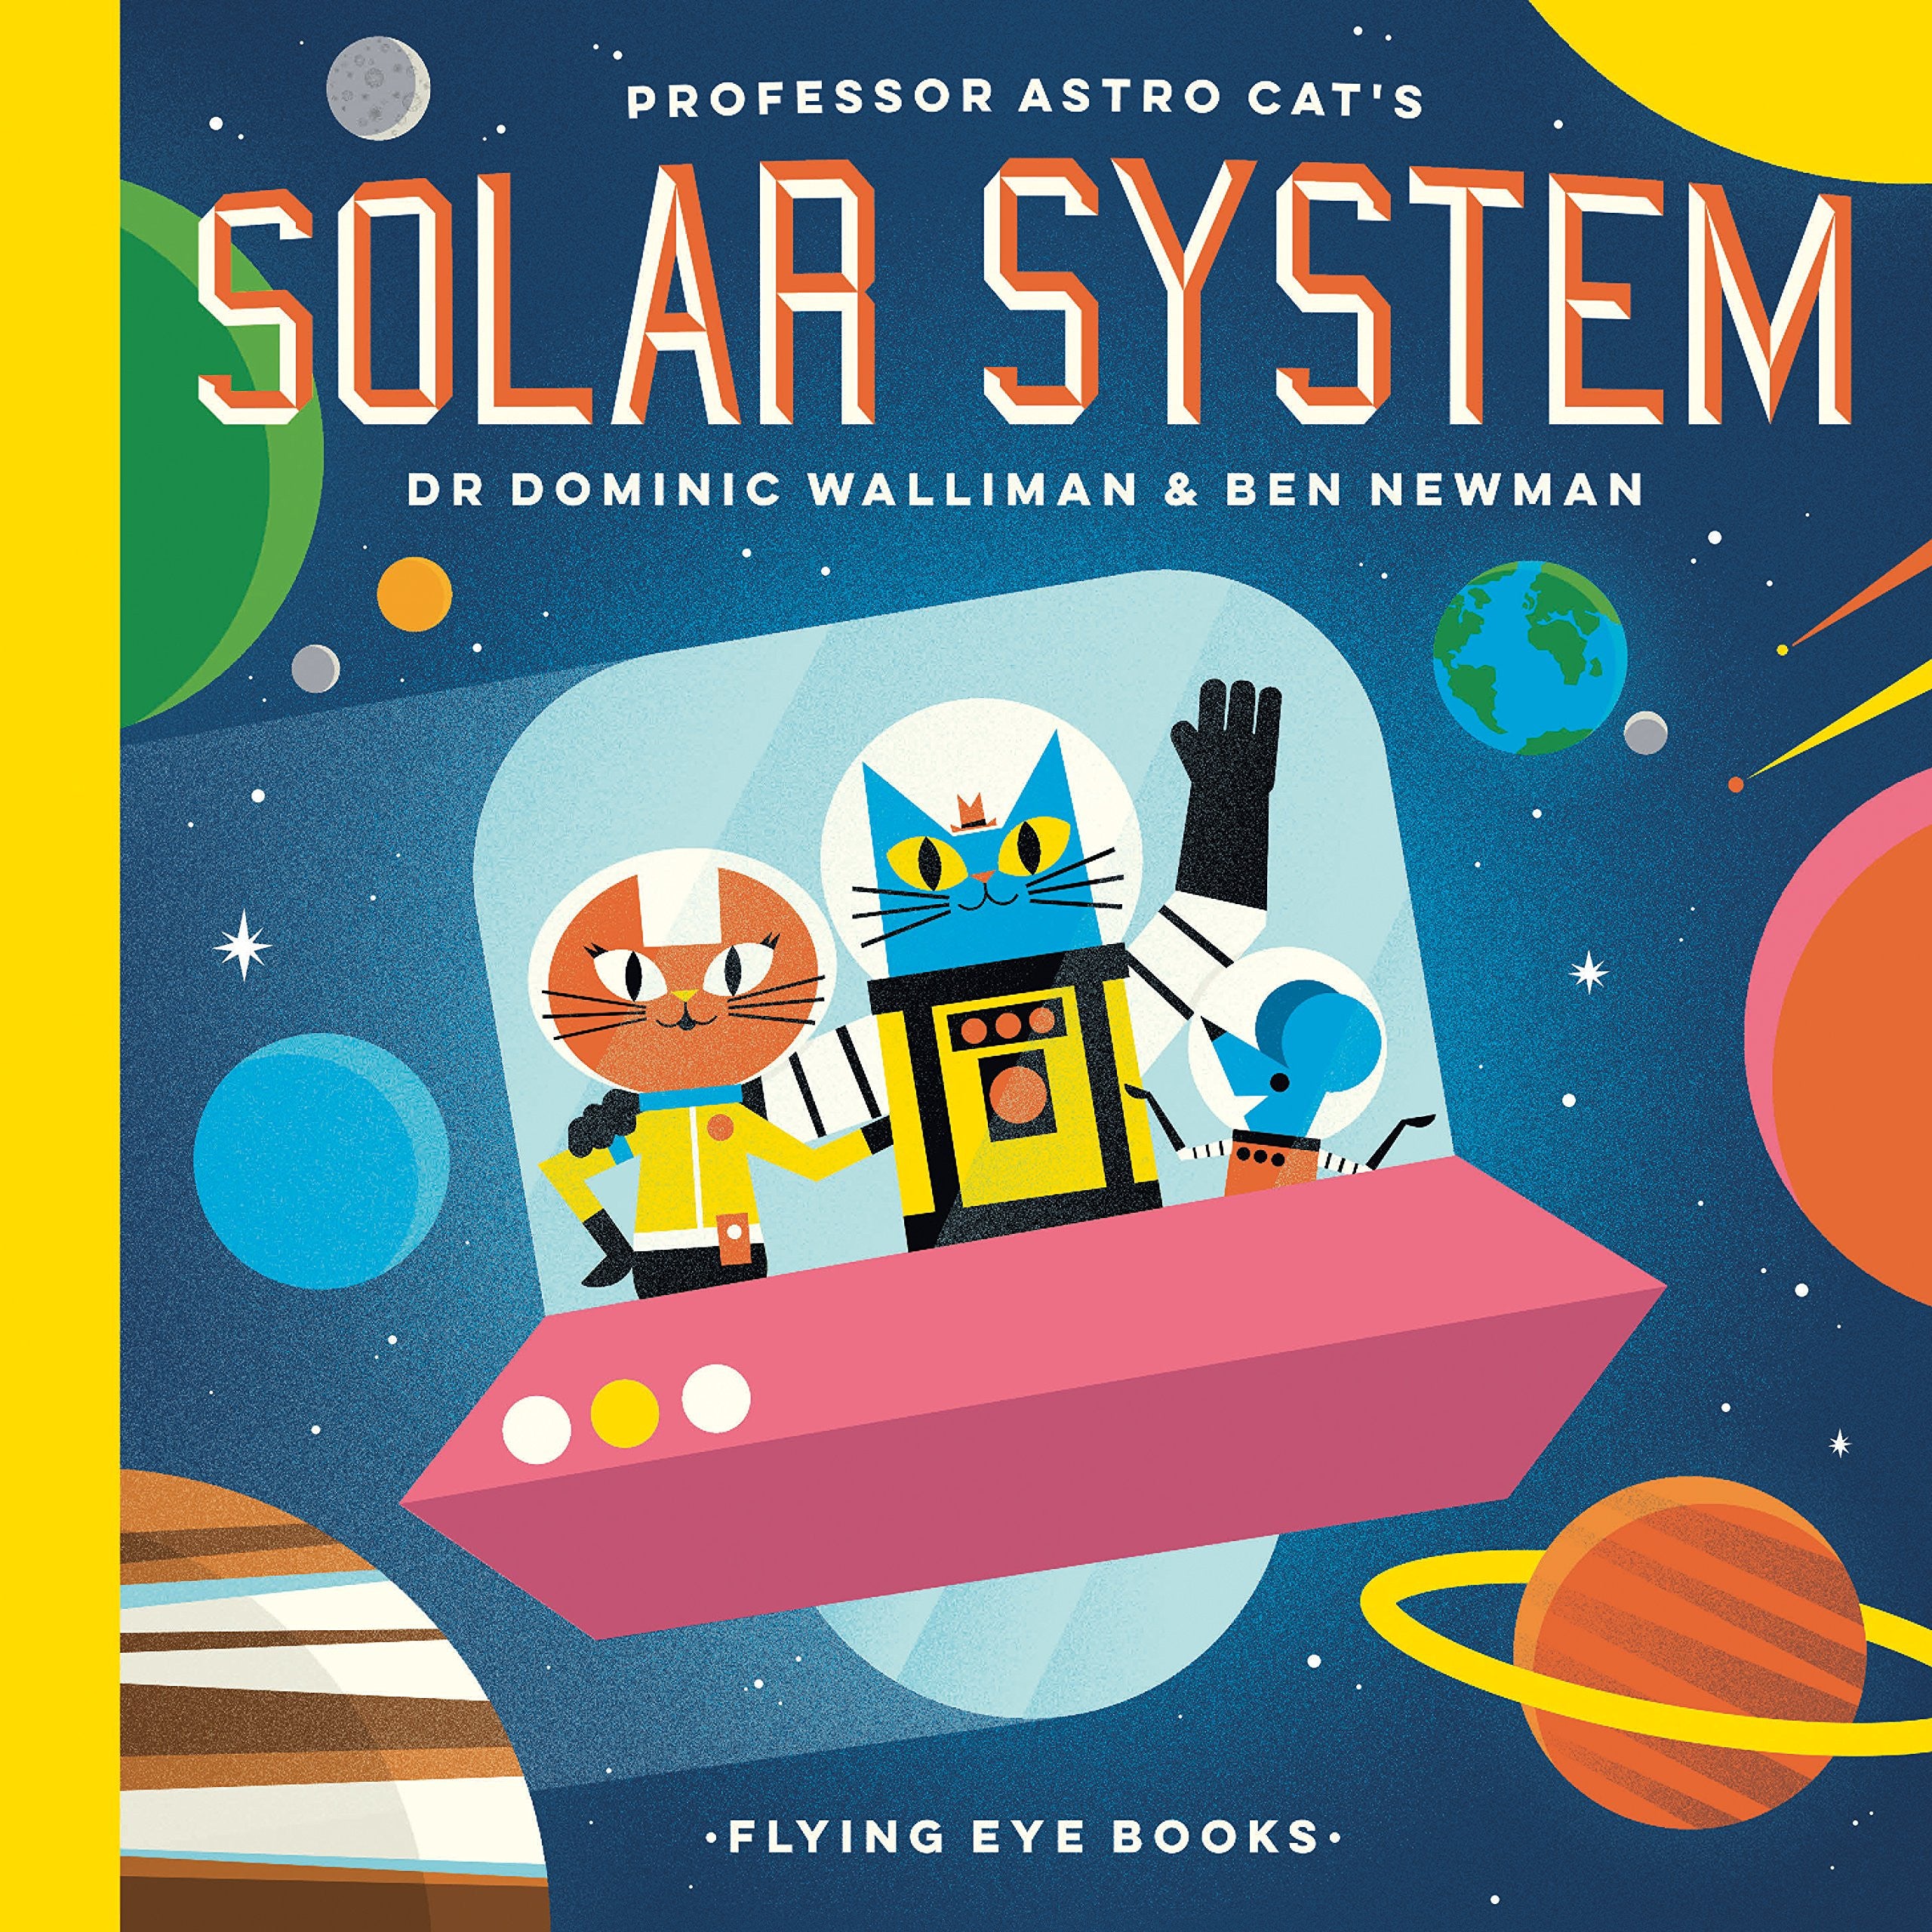 Professor Astro Cat and the Solar System